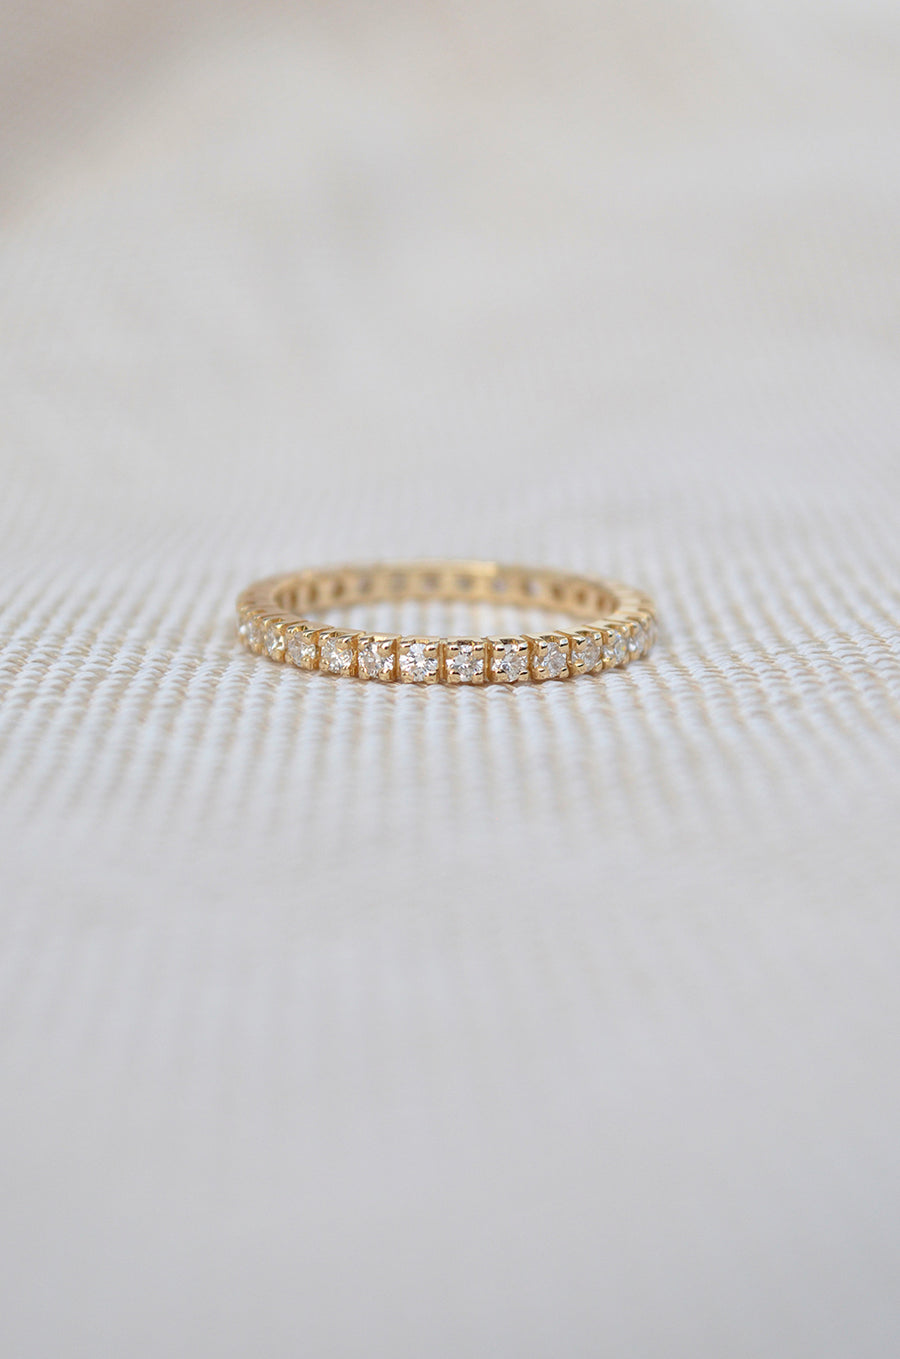 Laps Around The Sun Ring - Gold 14k & Diamonds